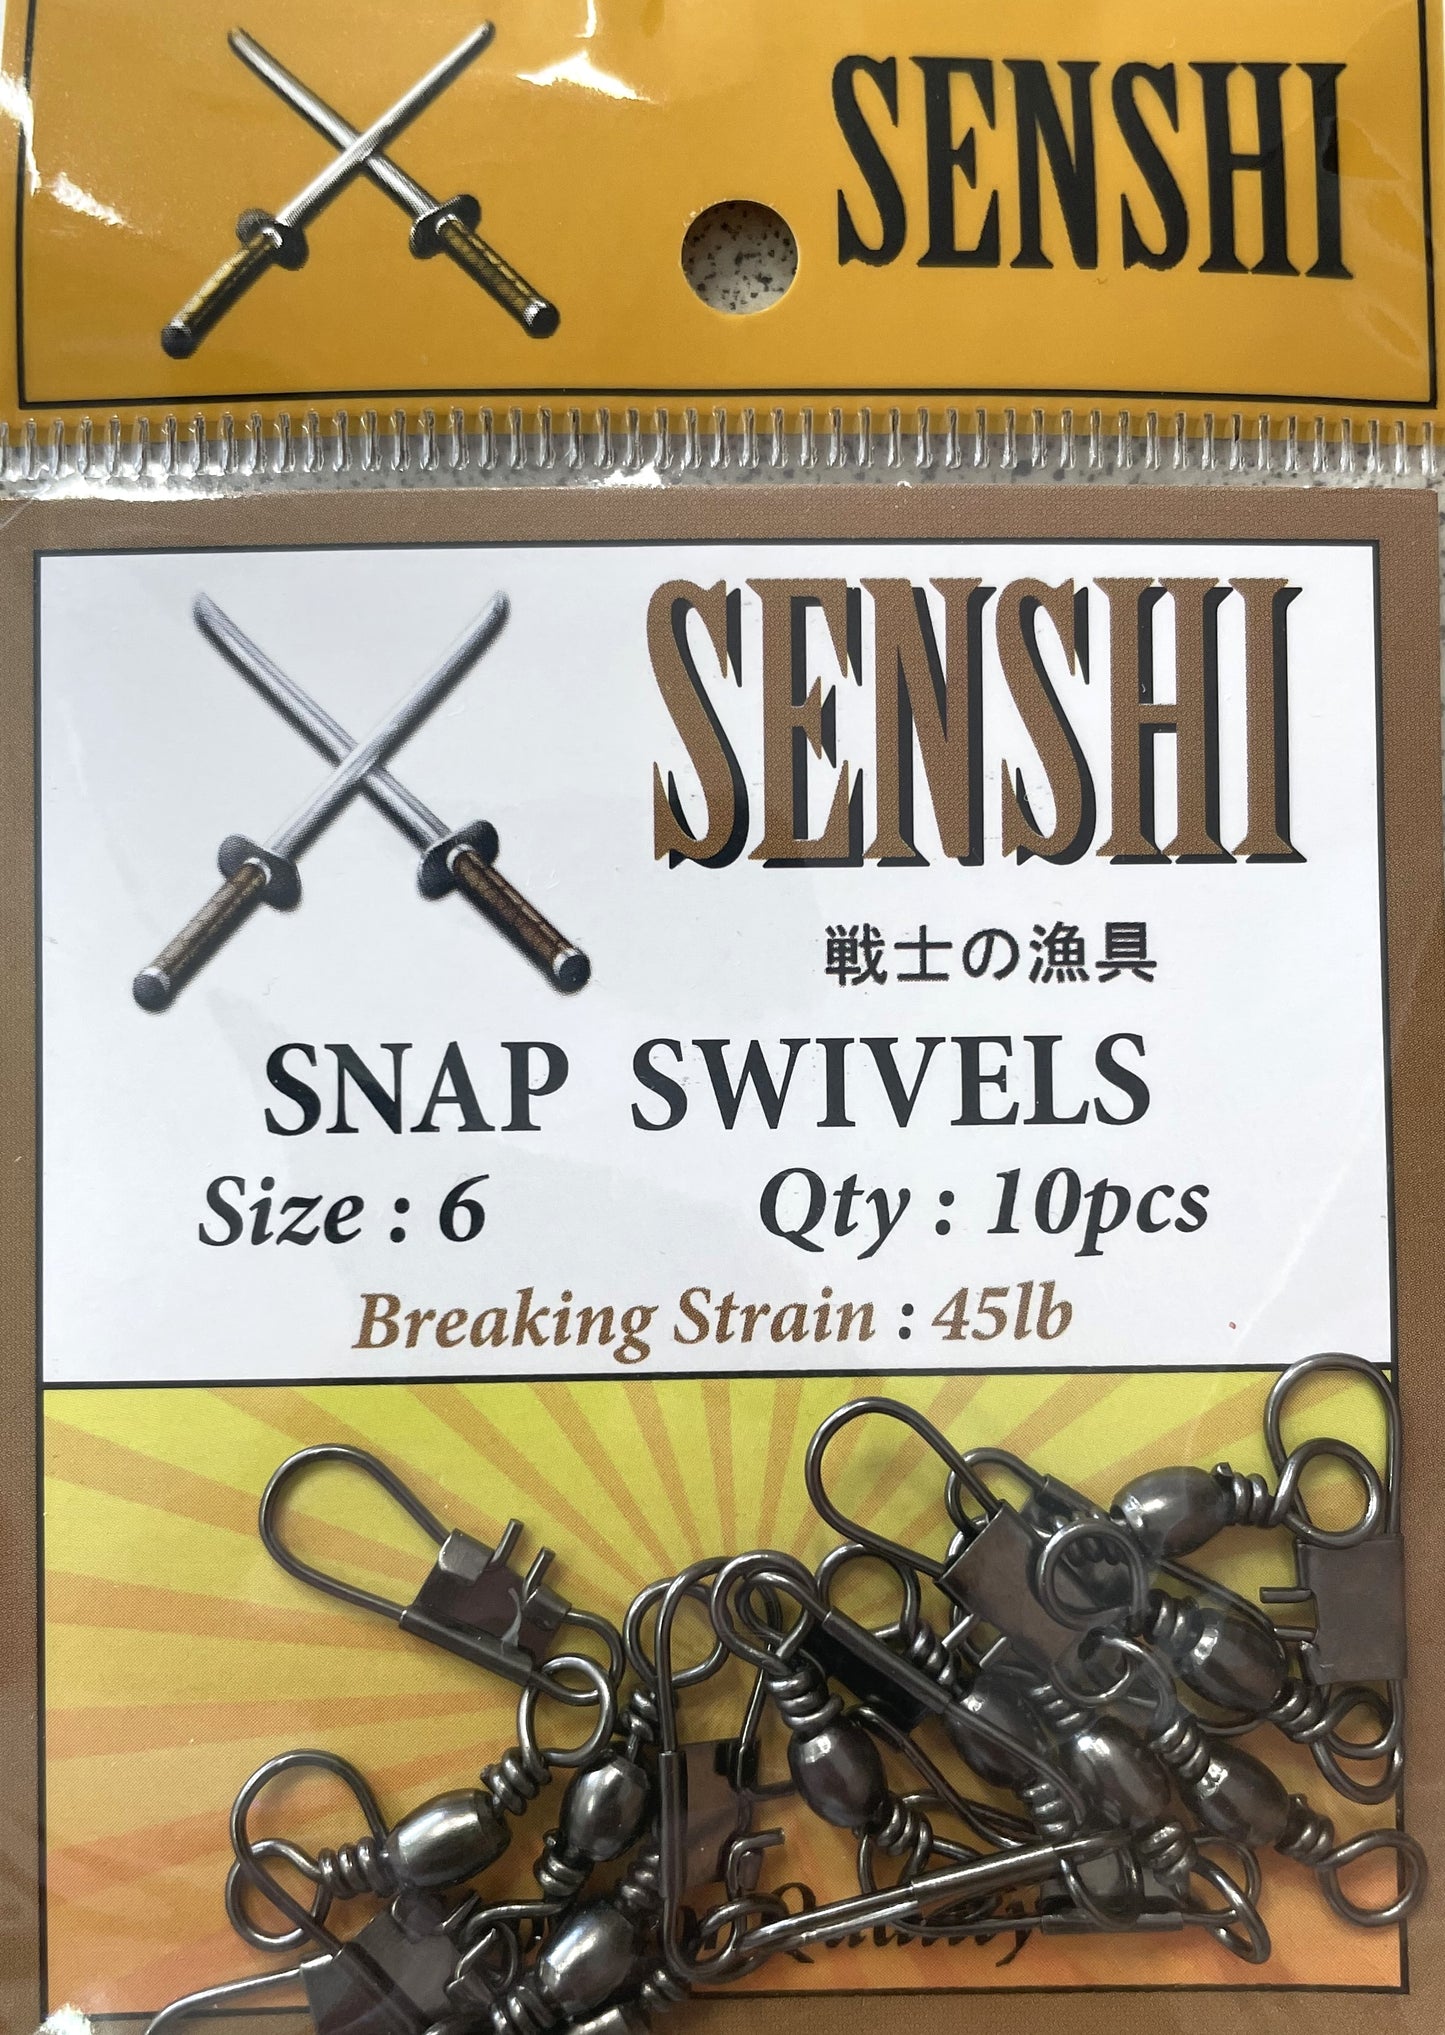 Senshi Snap Swivels - Size 6